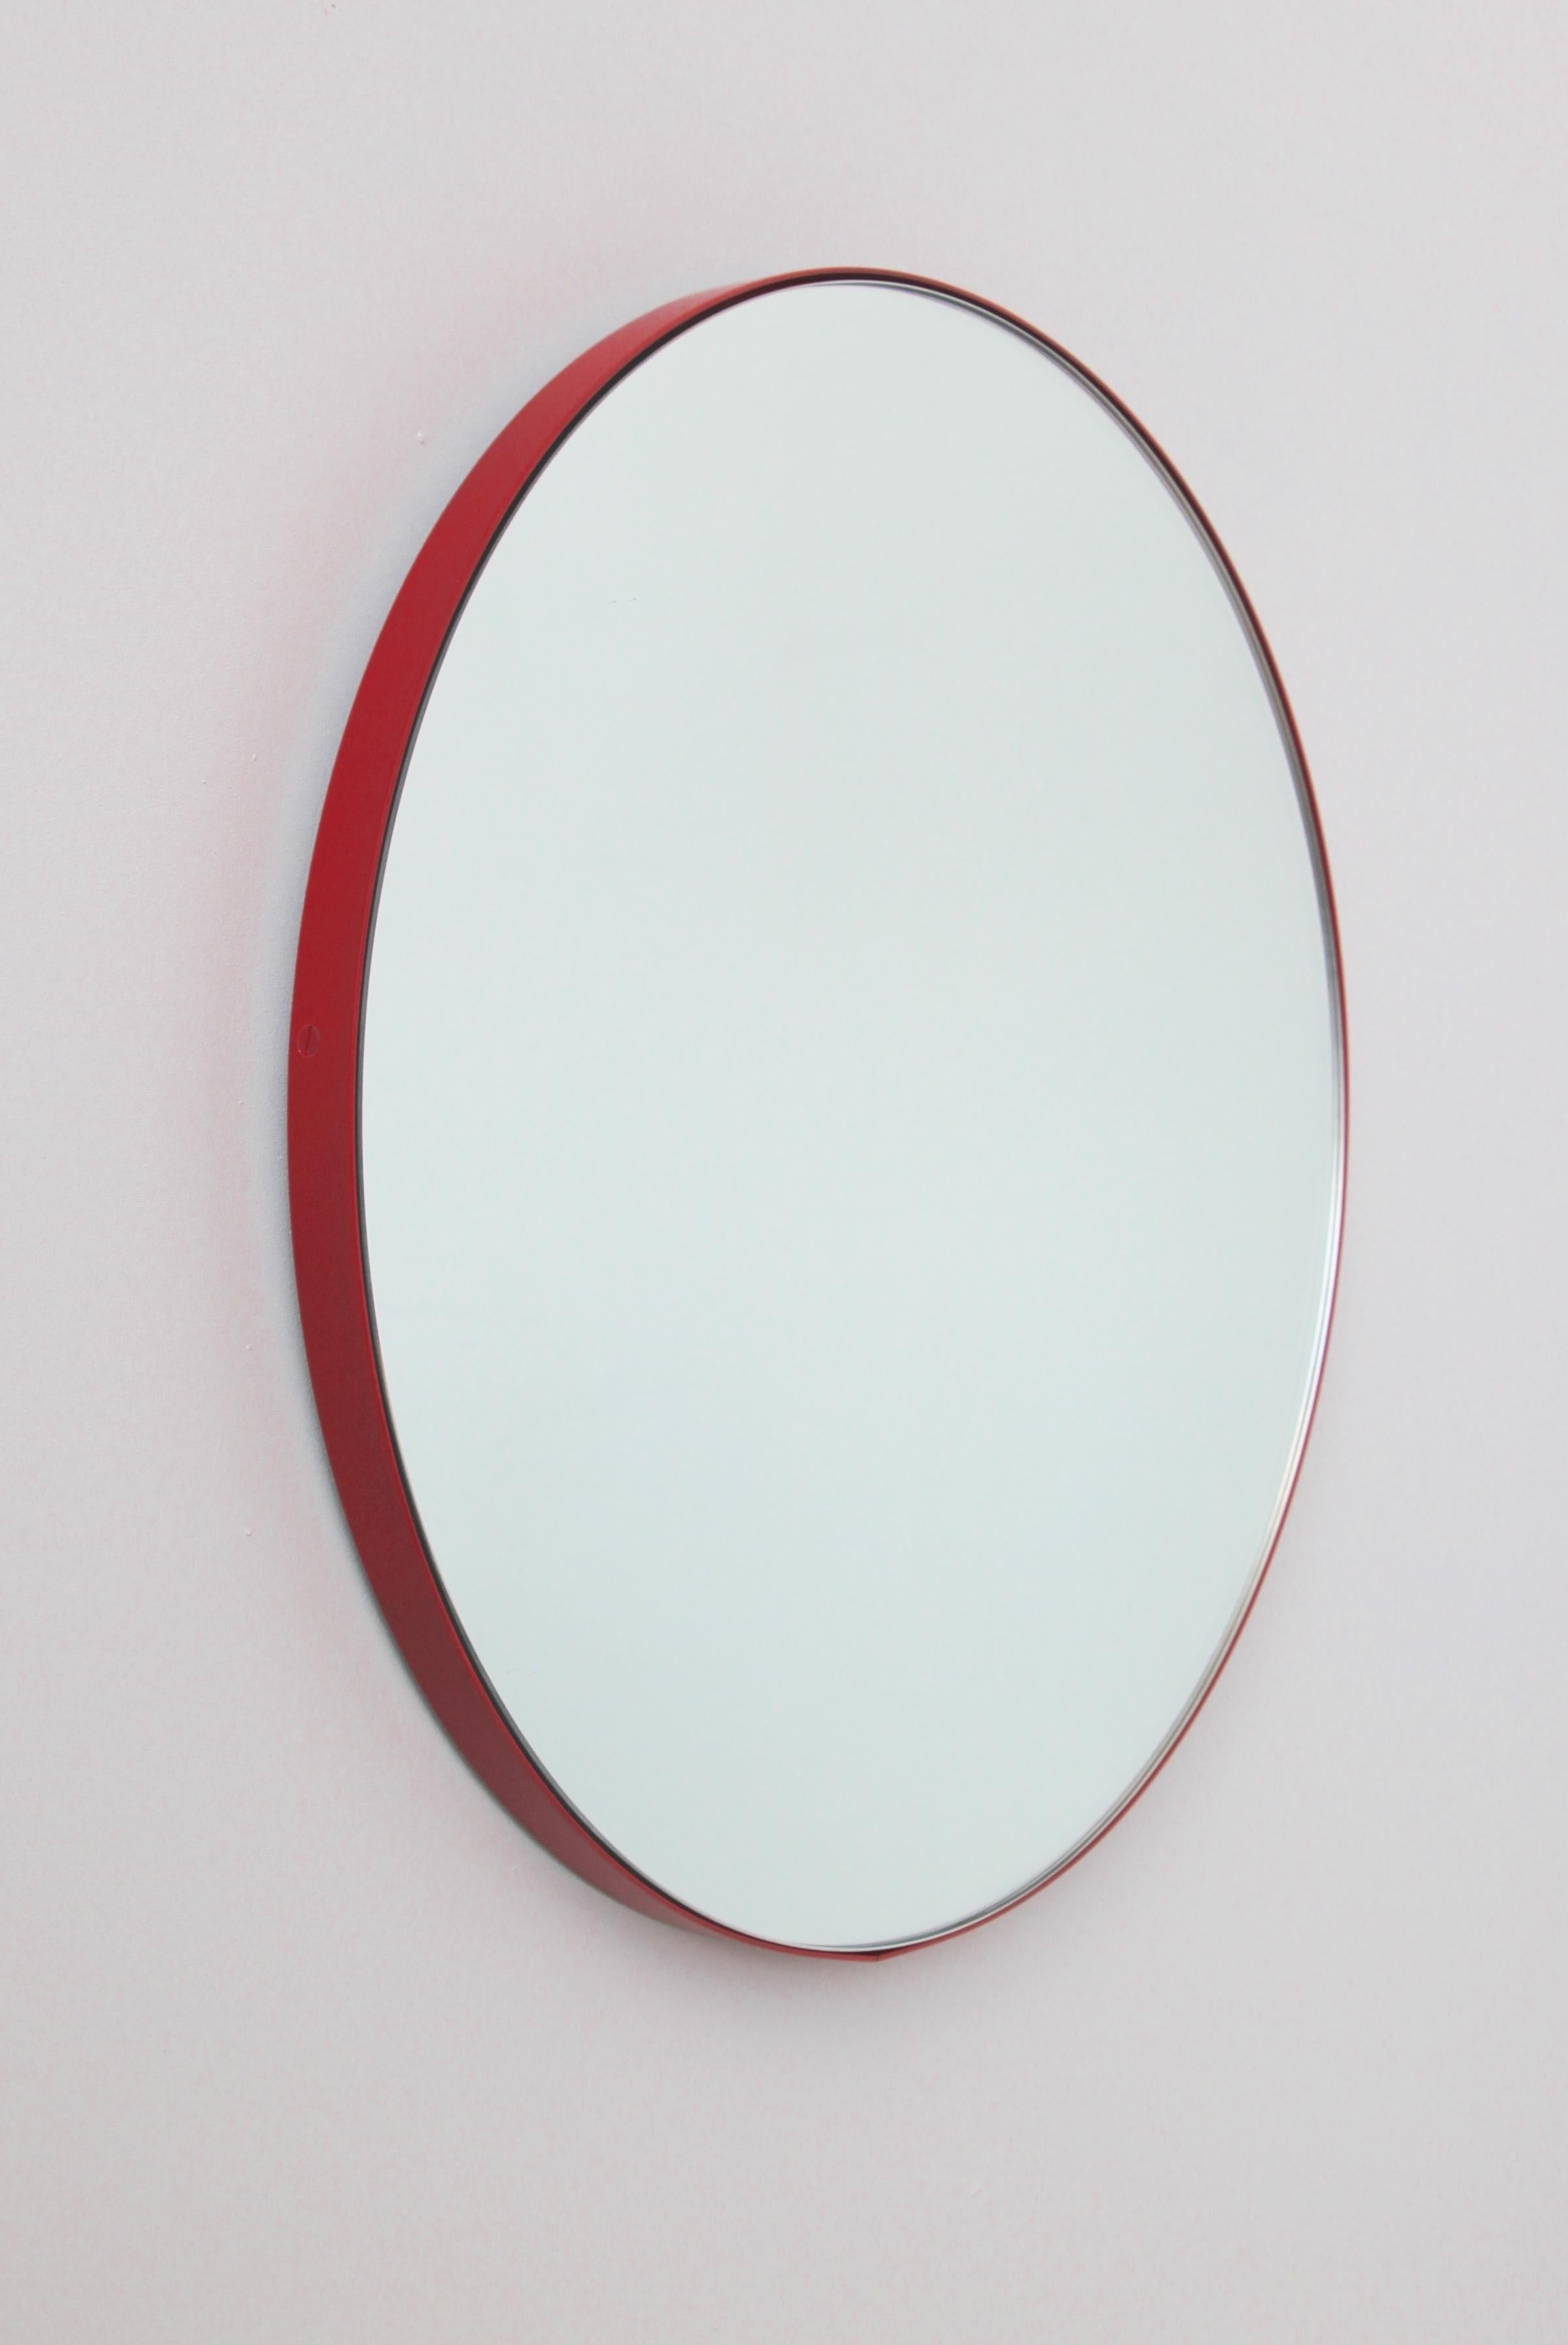 Aluminum Orbis Round Minimalist Mirror with Red Frame, Medium For Sale